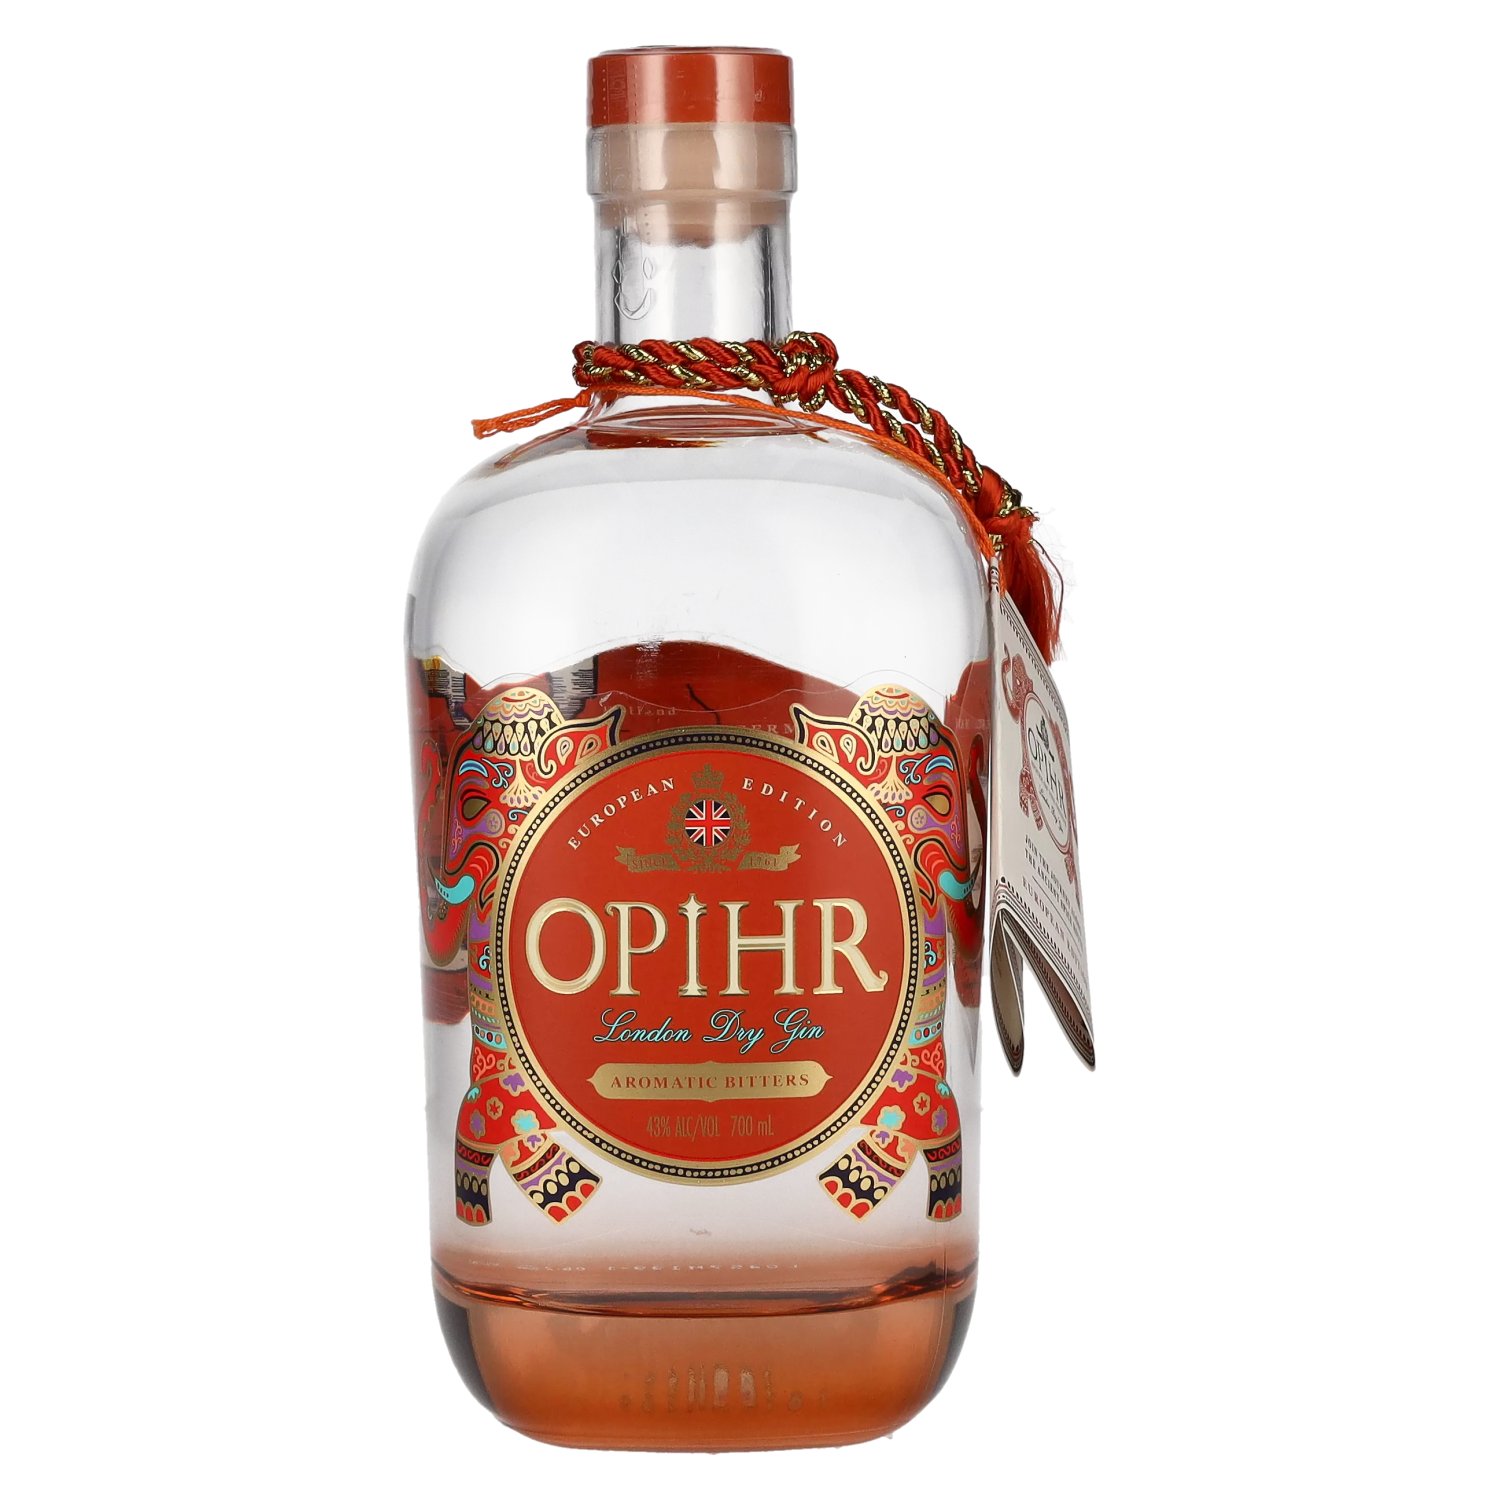 Opihr London Dry Gin EUROPEAN 0,7l 43% Vol. EDITION